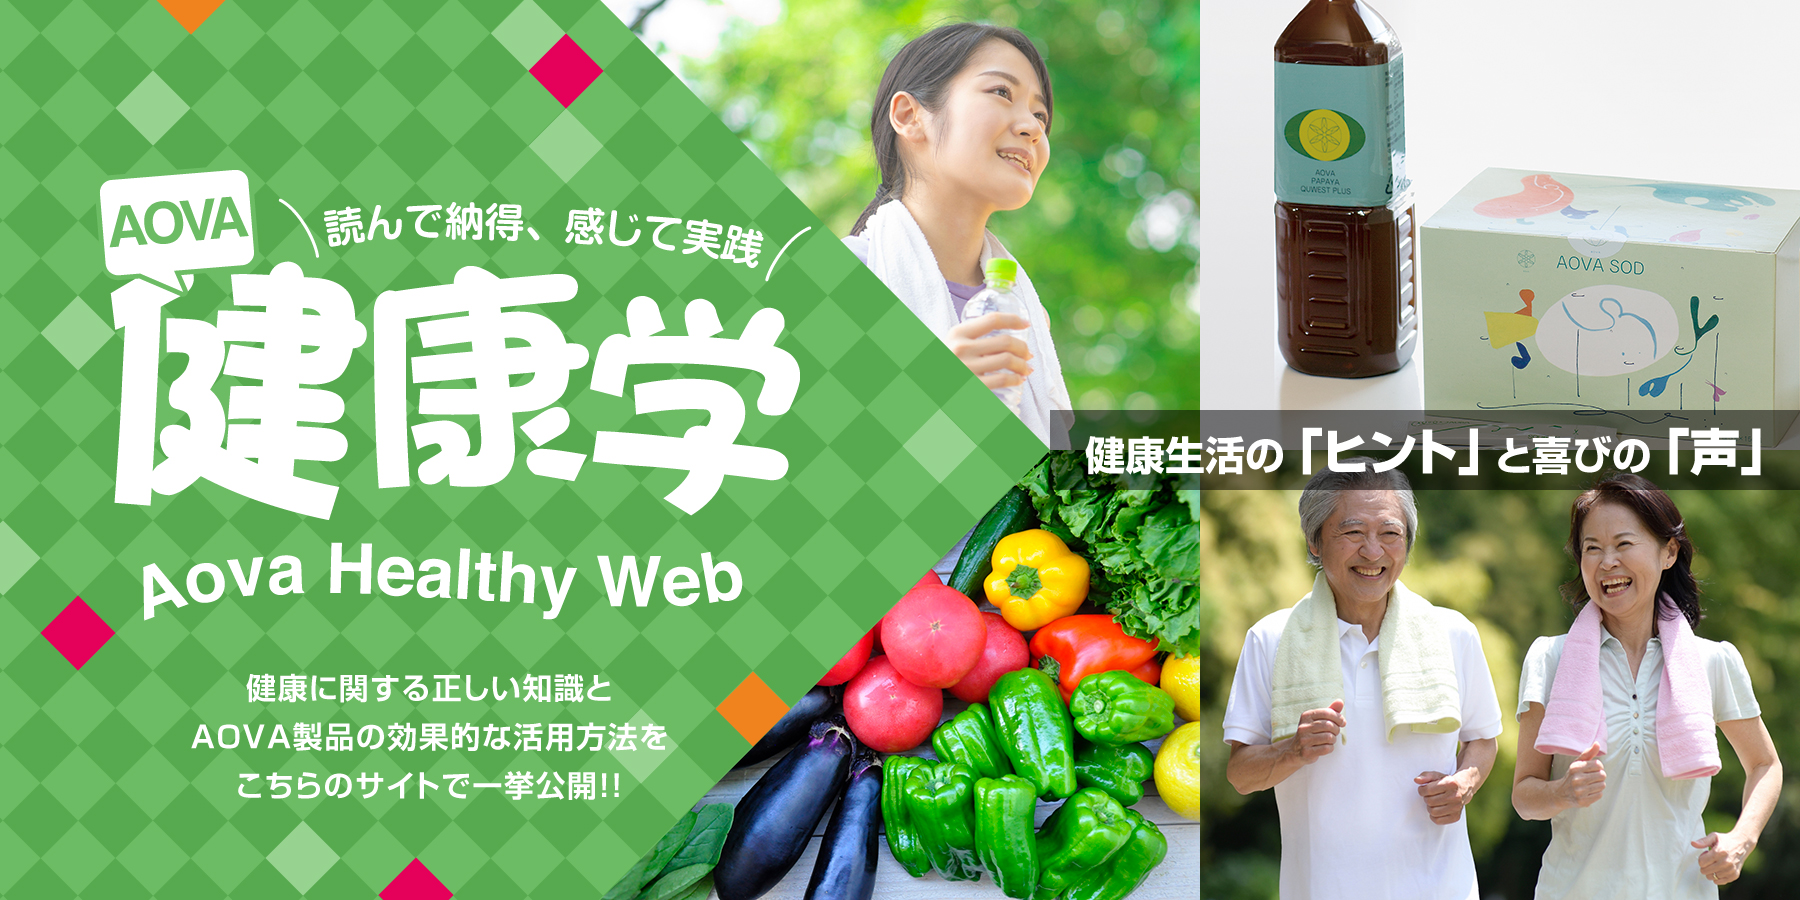 Aova Healthy Web 〜健康に関する正しい知識とAOVA製品の効果的な活用方法を一挙公開!!〜